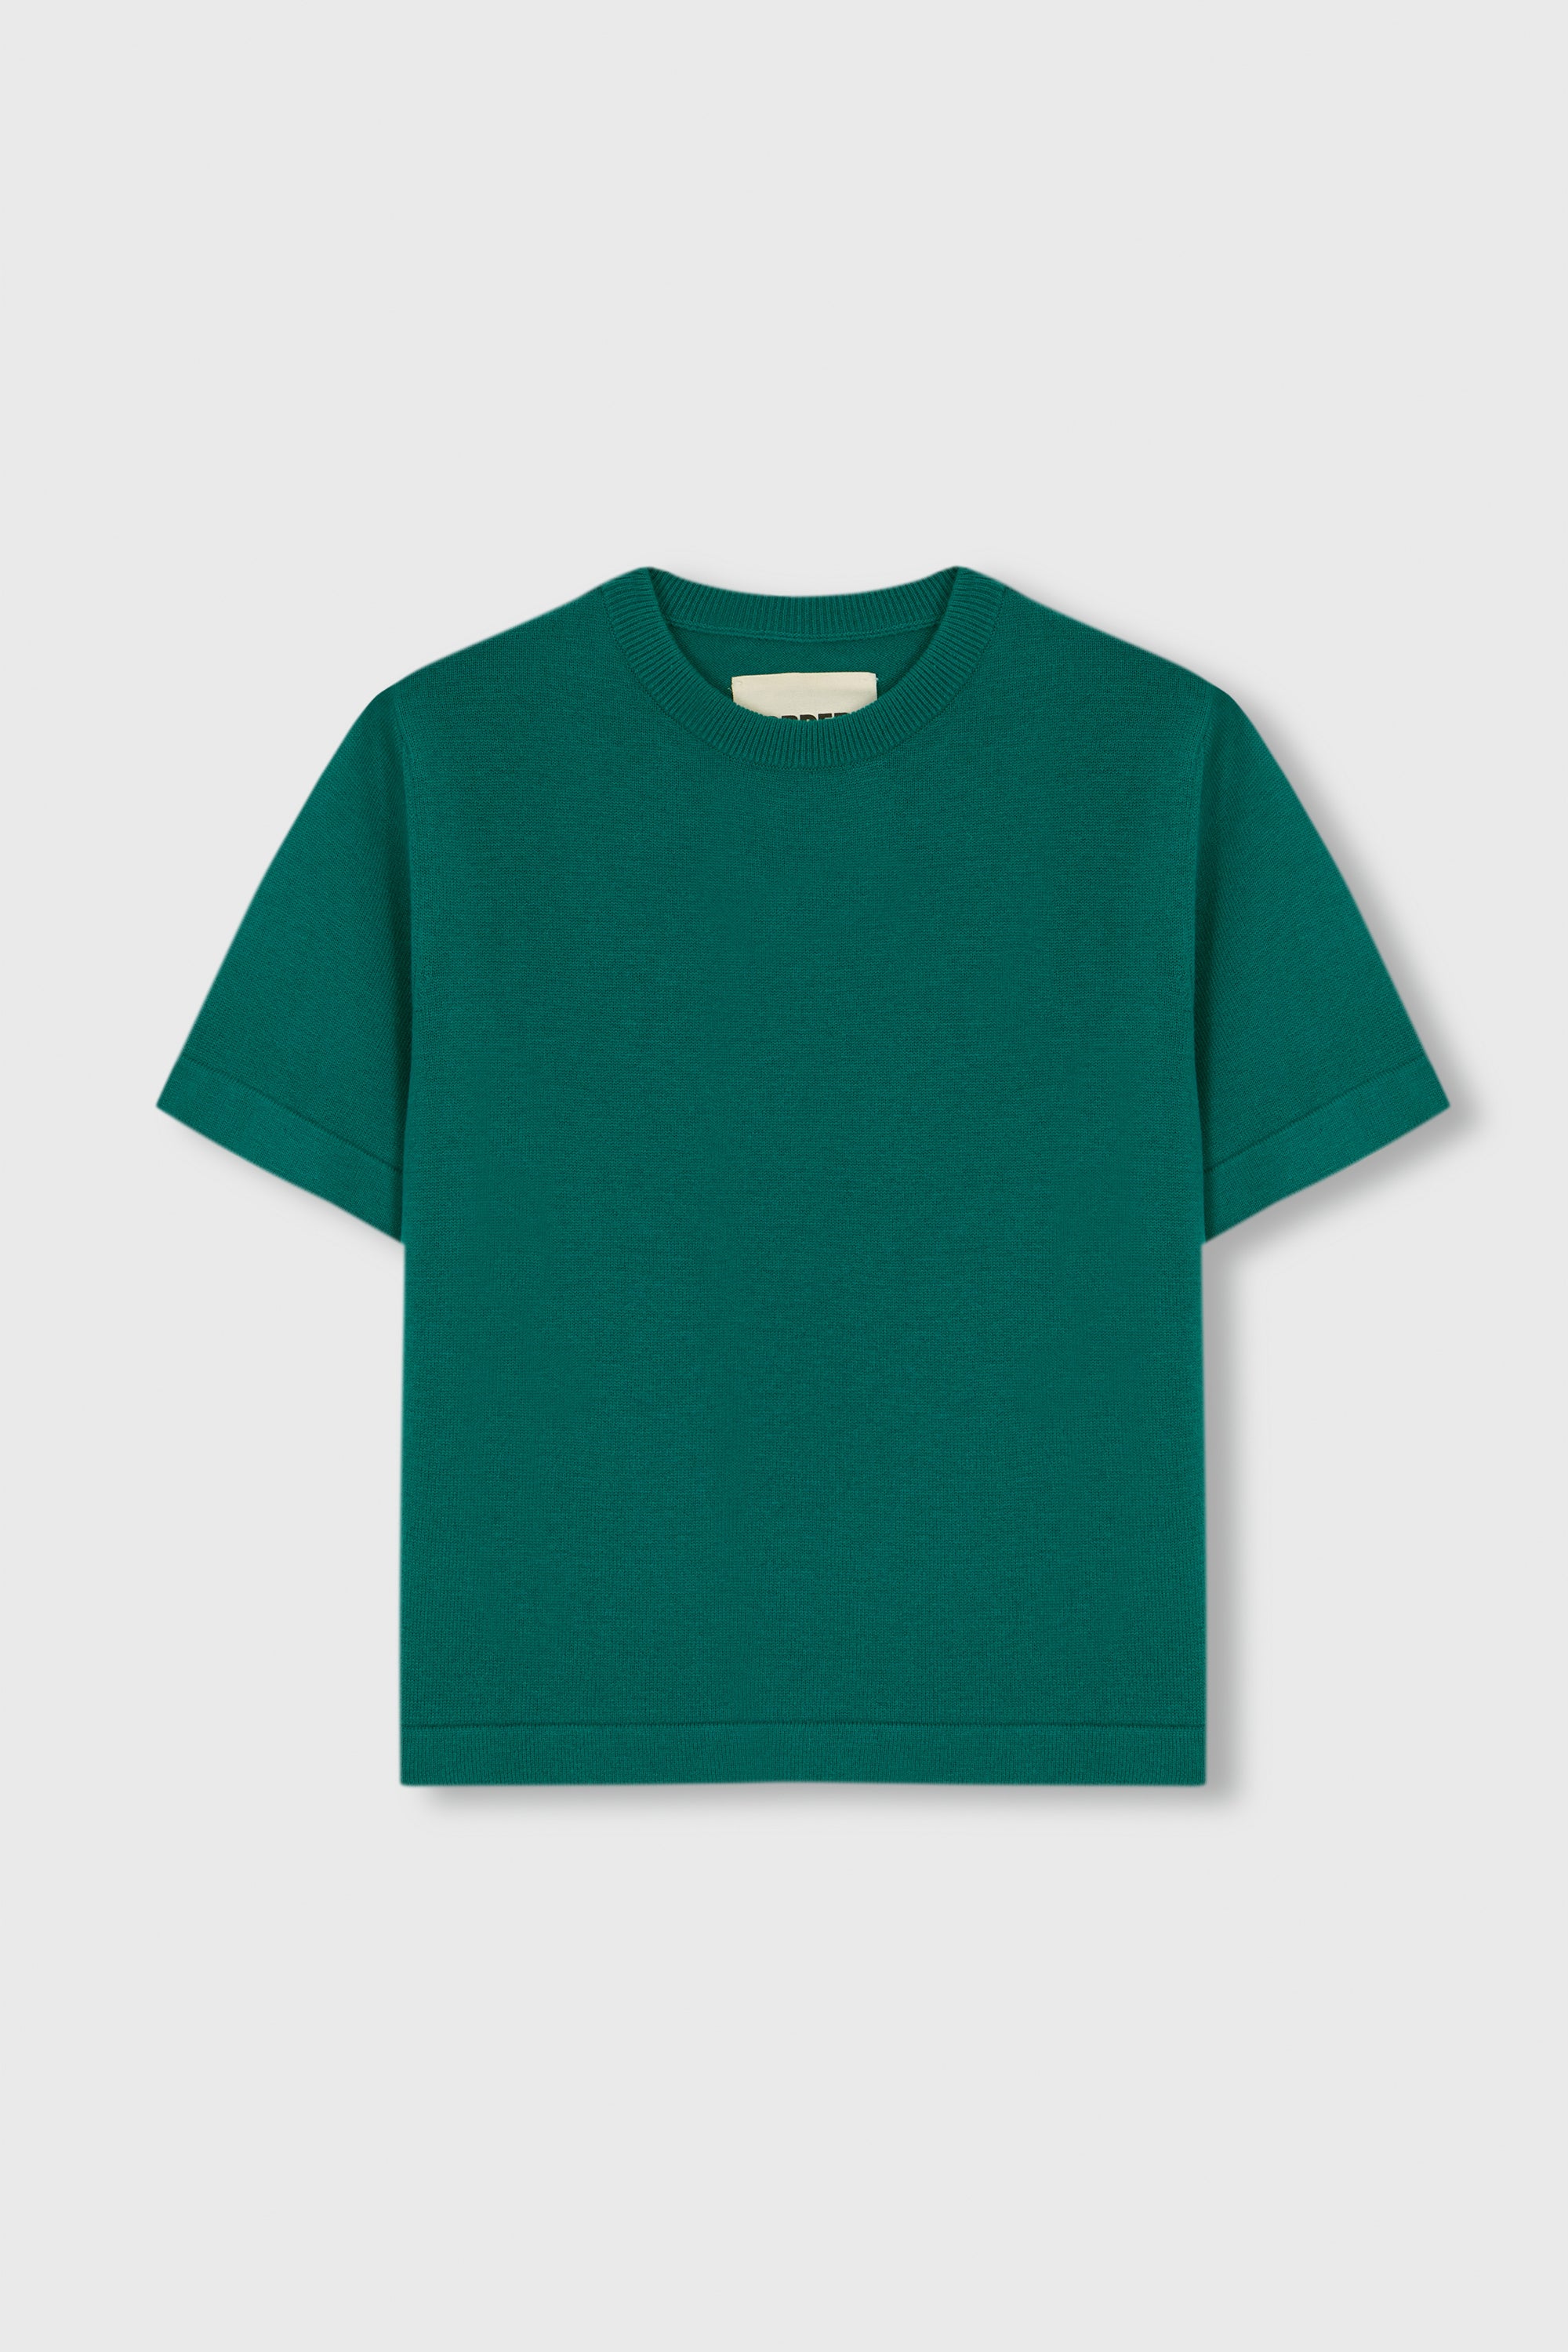 Merino Wool T-shirt Teal Green Cordera